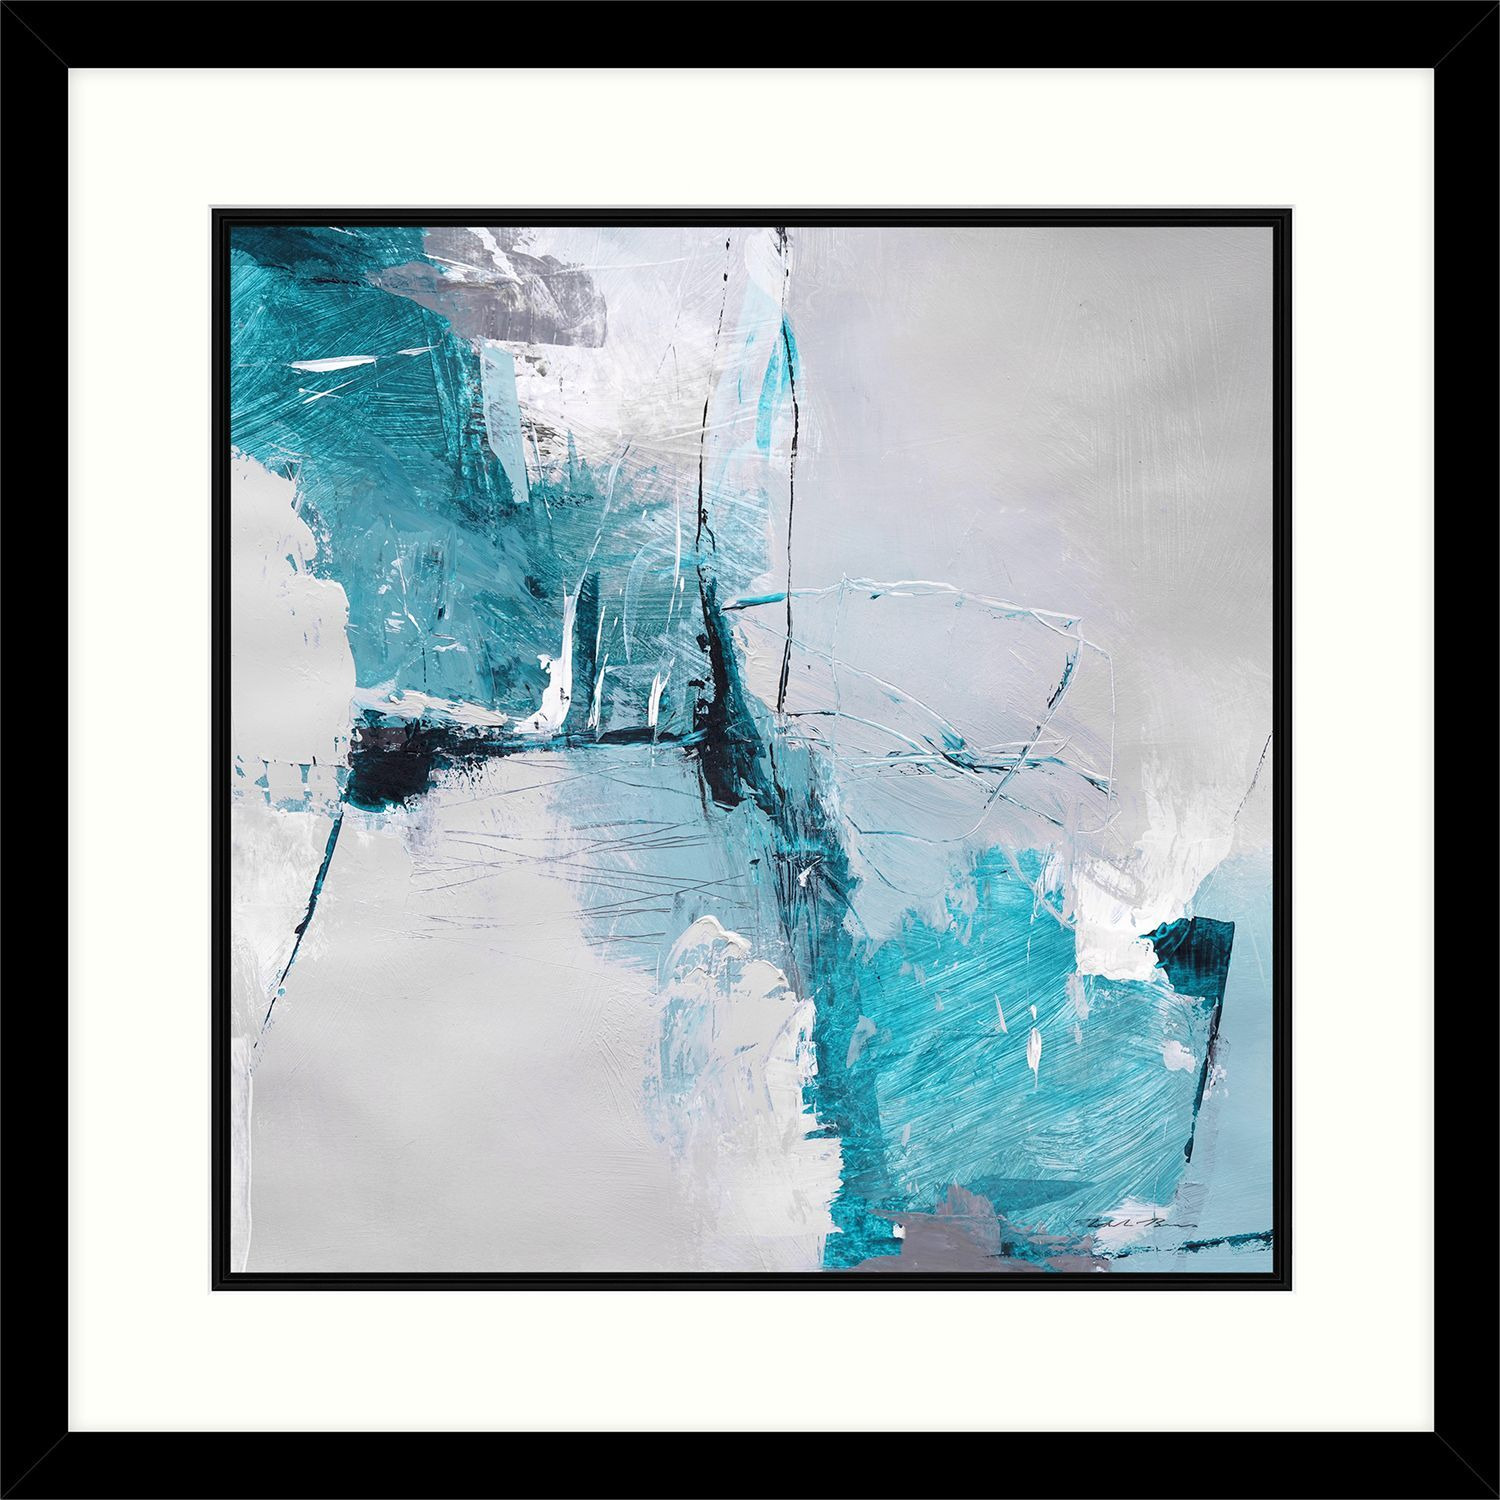 Natasha Barnes - Free Flow II Framed Print & Mount, 61.5 x 61.5cm